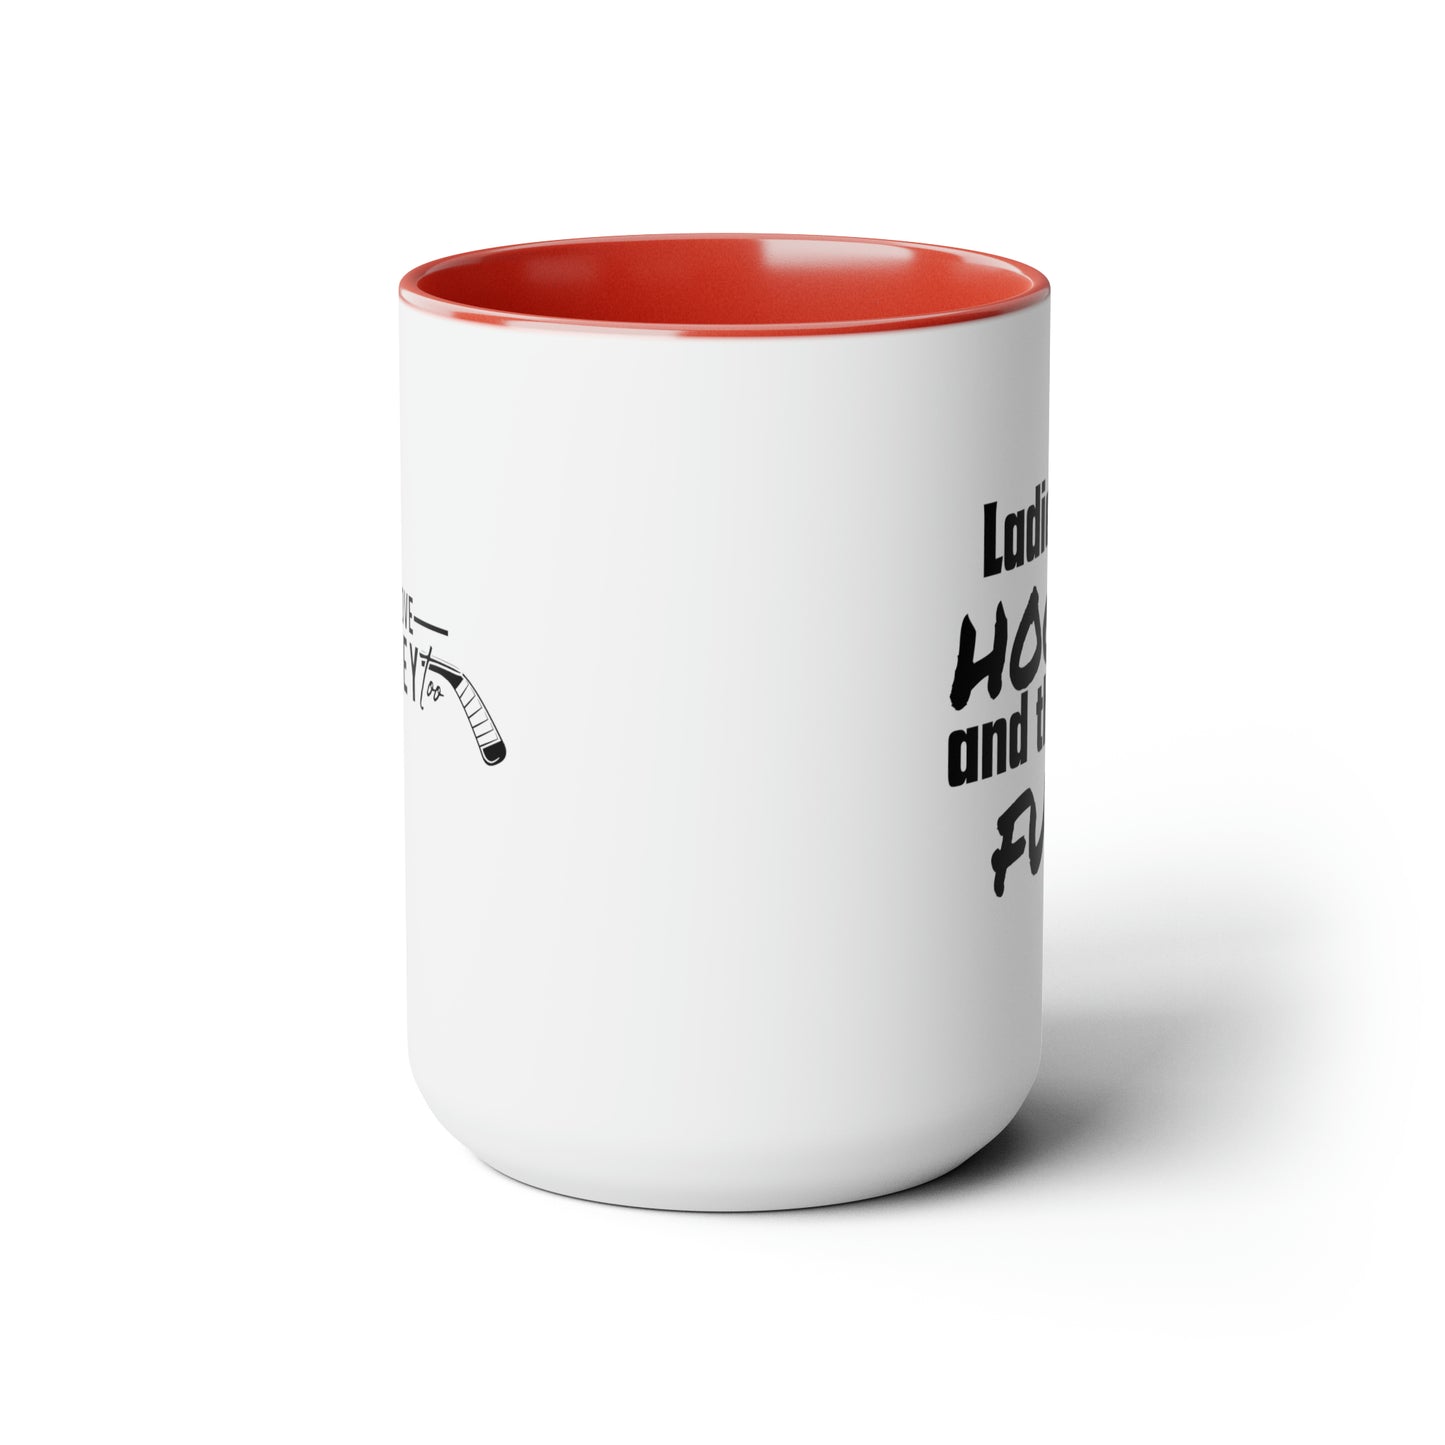 Ladies Love Hockey and the Word Fuck! Two-Tone Coffee Mug, 15oz